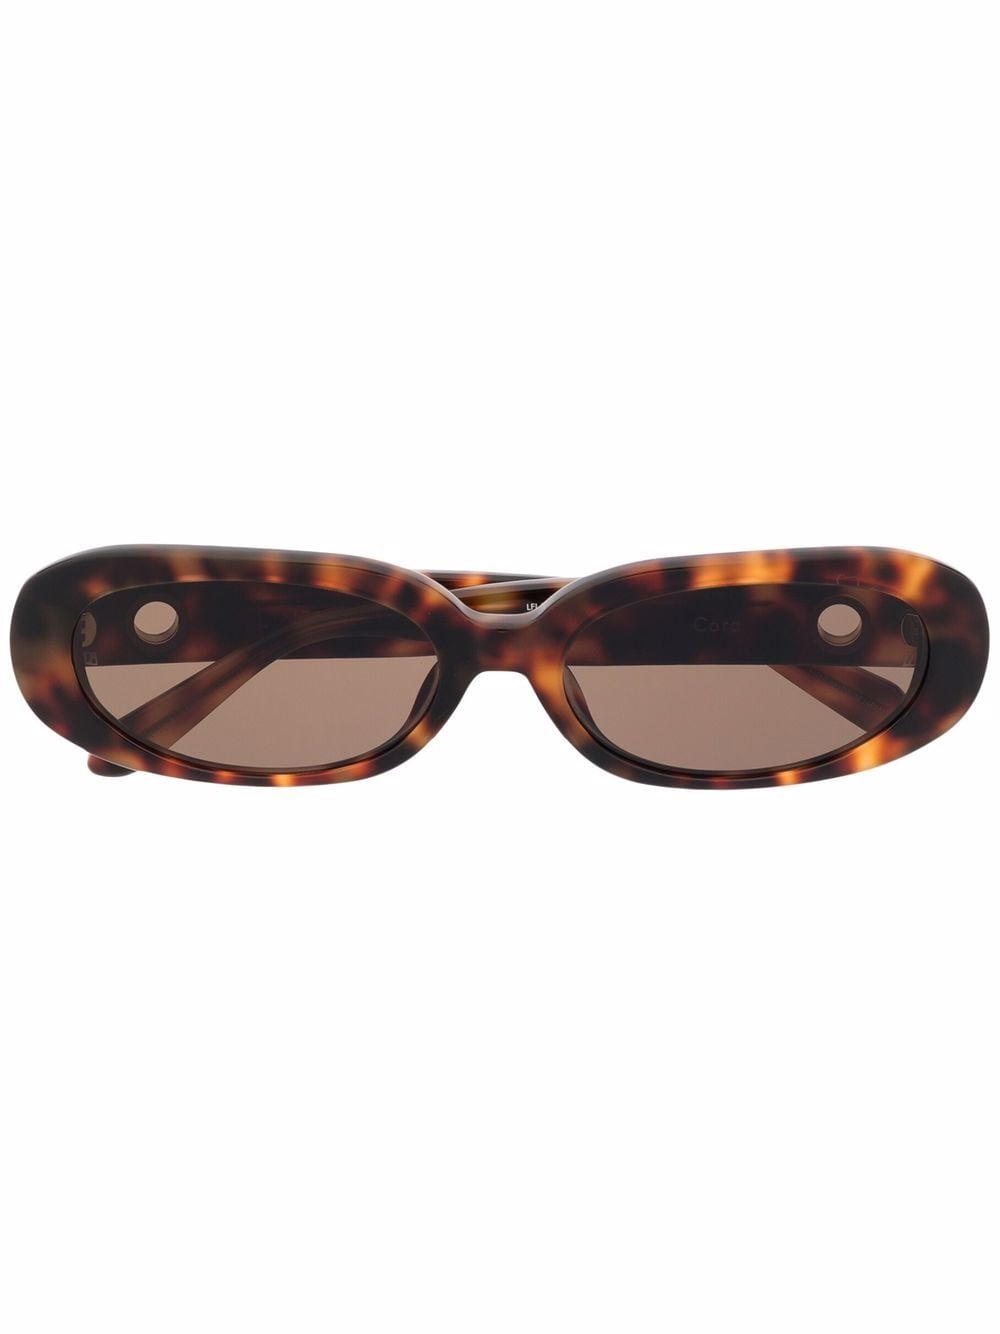 Image 1 of Linda Farrow tortoiseshell-effect tinted sunglasses